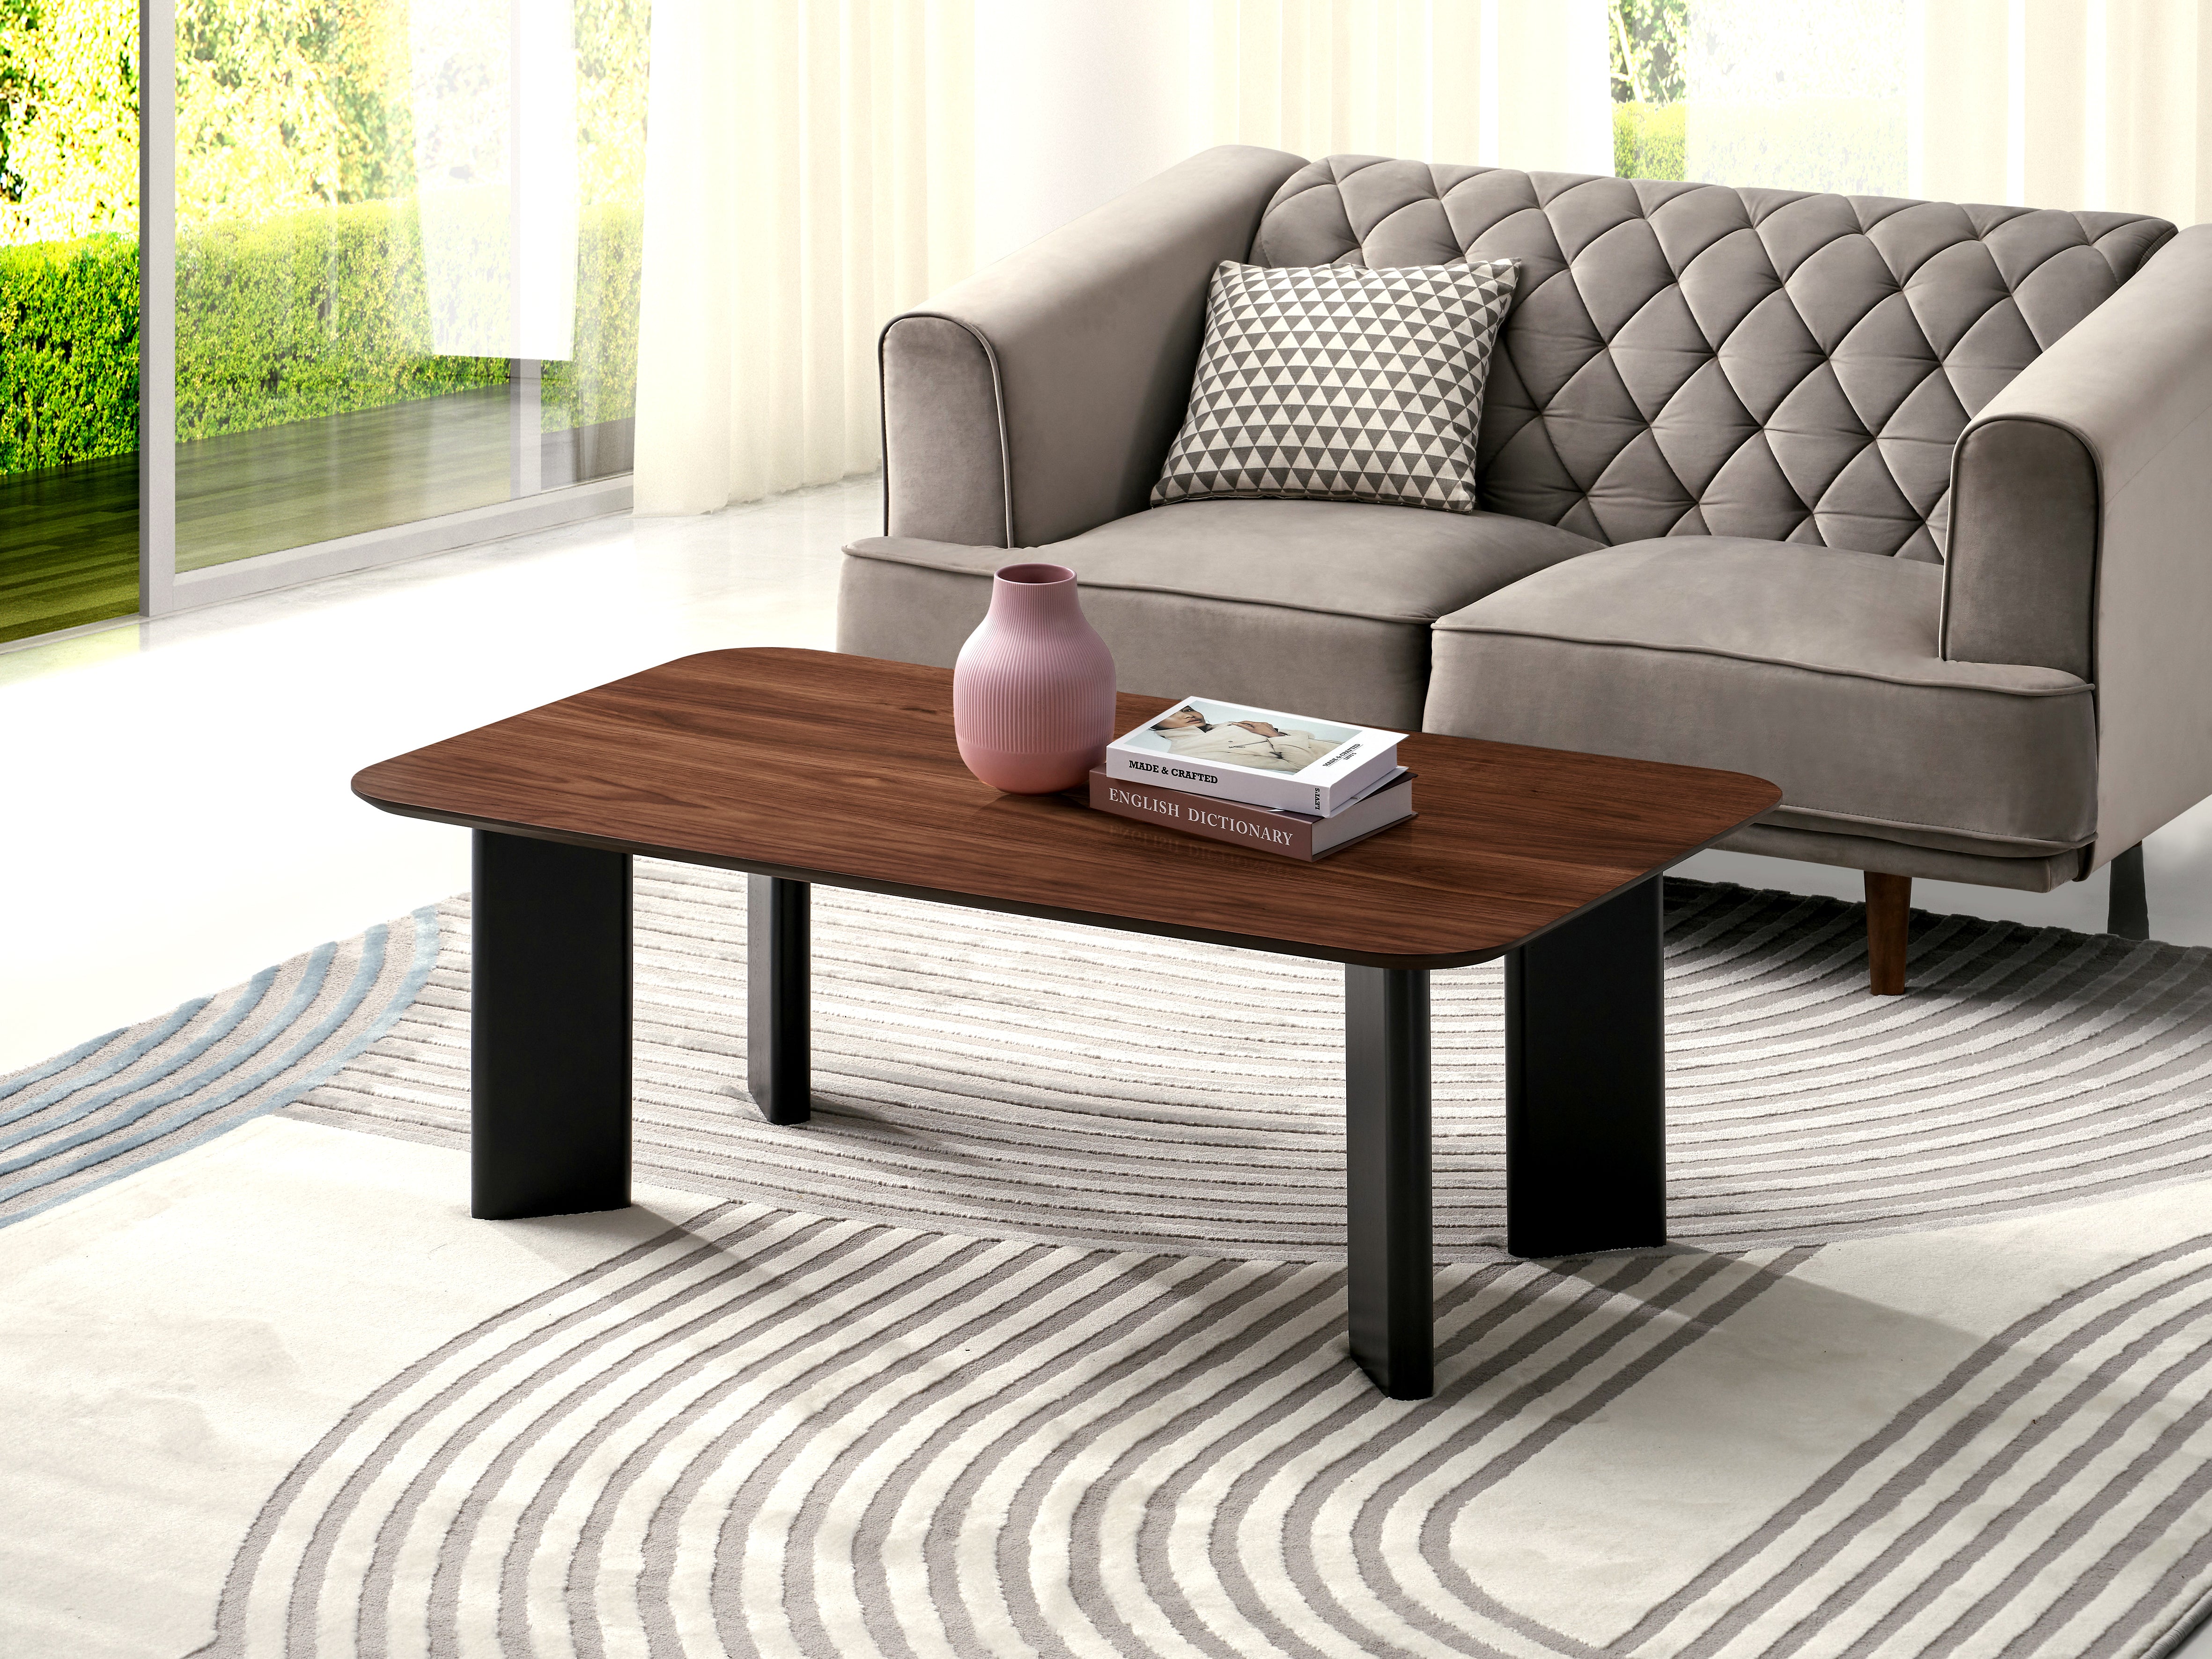 Joss Rectangular Shape Modern Wood Coffee Table, Walnut by NESTMOD